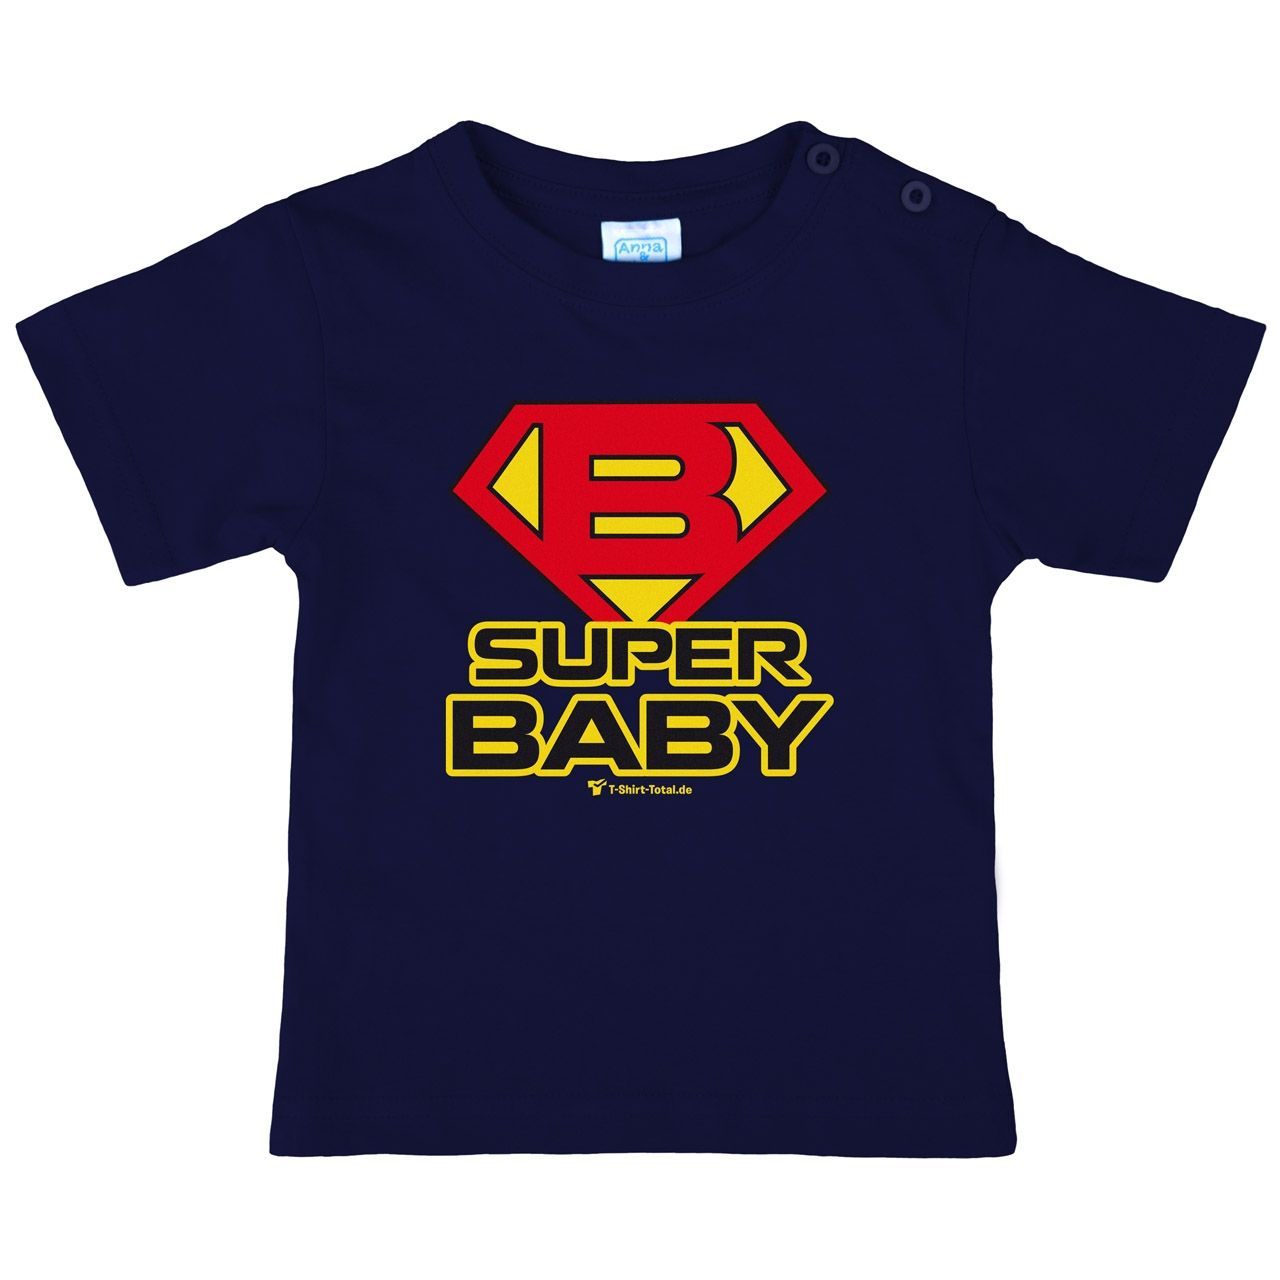 Super Baby Kinder T-Shirt navy 92